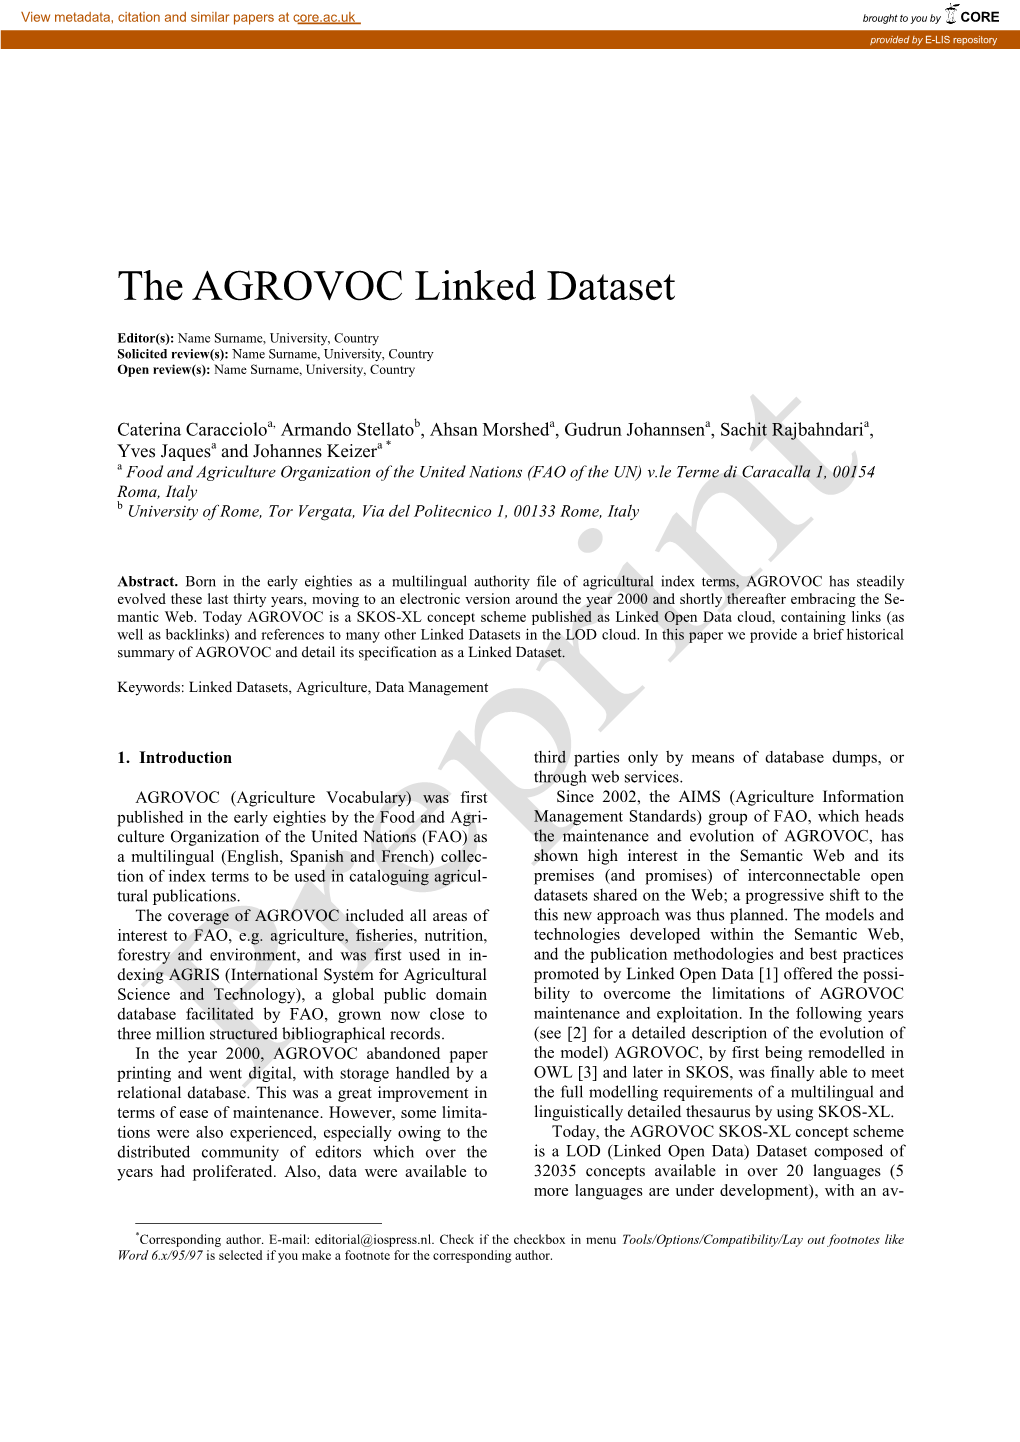 The AGROVOC Linked Dataset